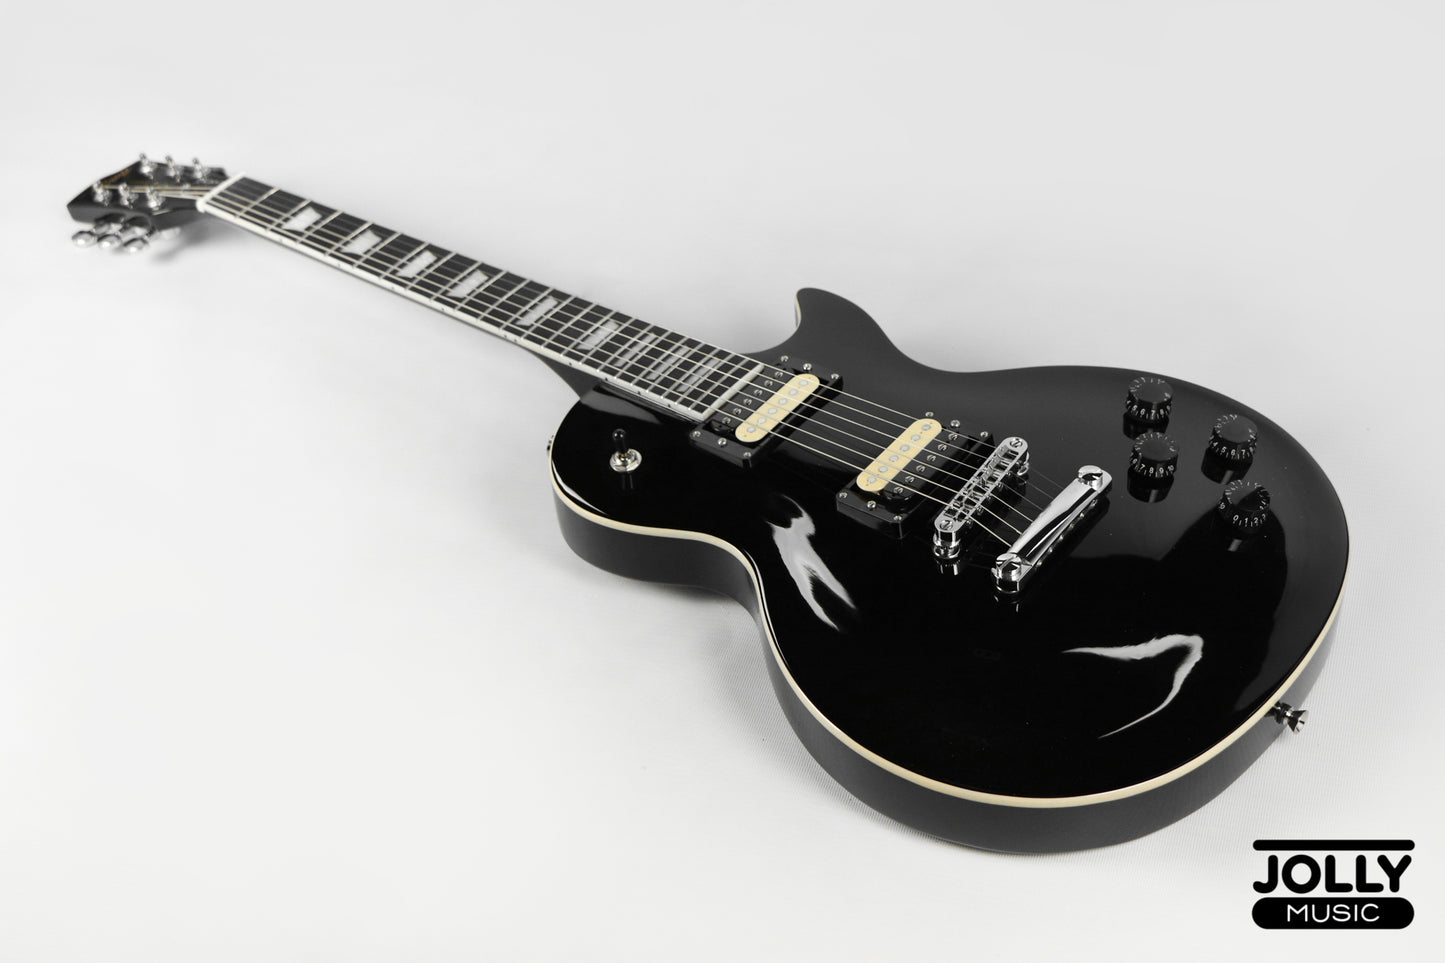 J-Craft SC-2 Single Cut Electric Guitar - Tuxedo Black